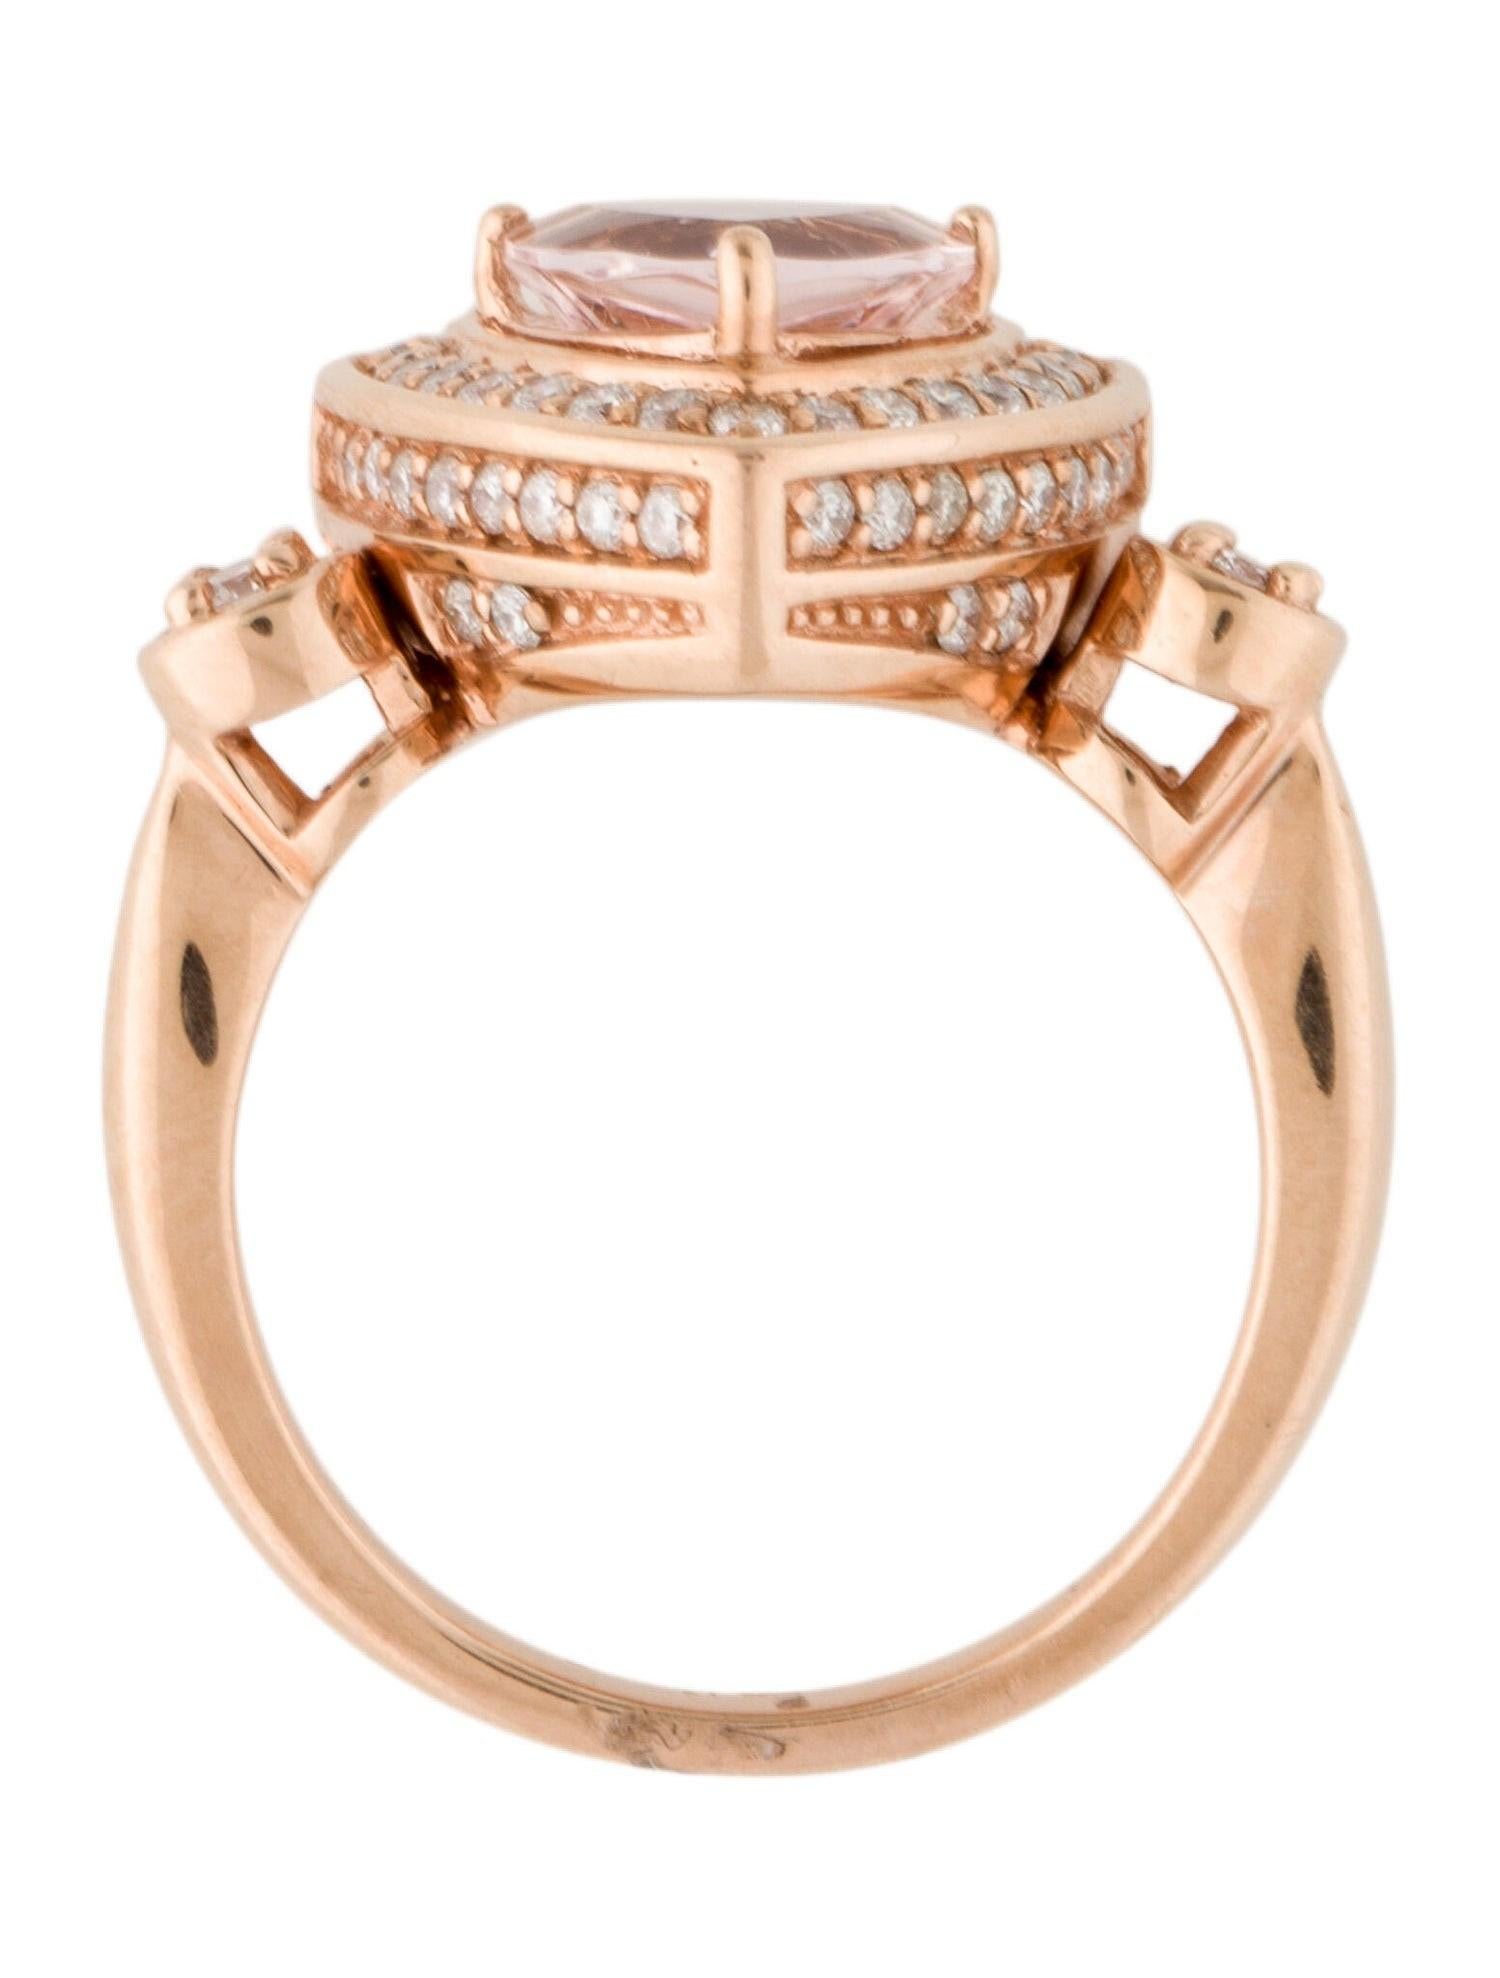 Women's or Men's 14k Diamond & 1.29ct Morganite Trillion Cut Cocktail Ring For Sale